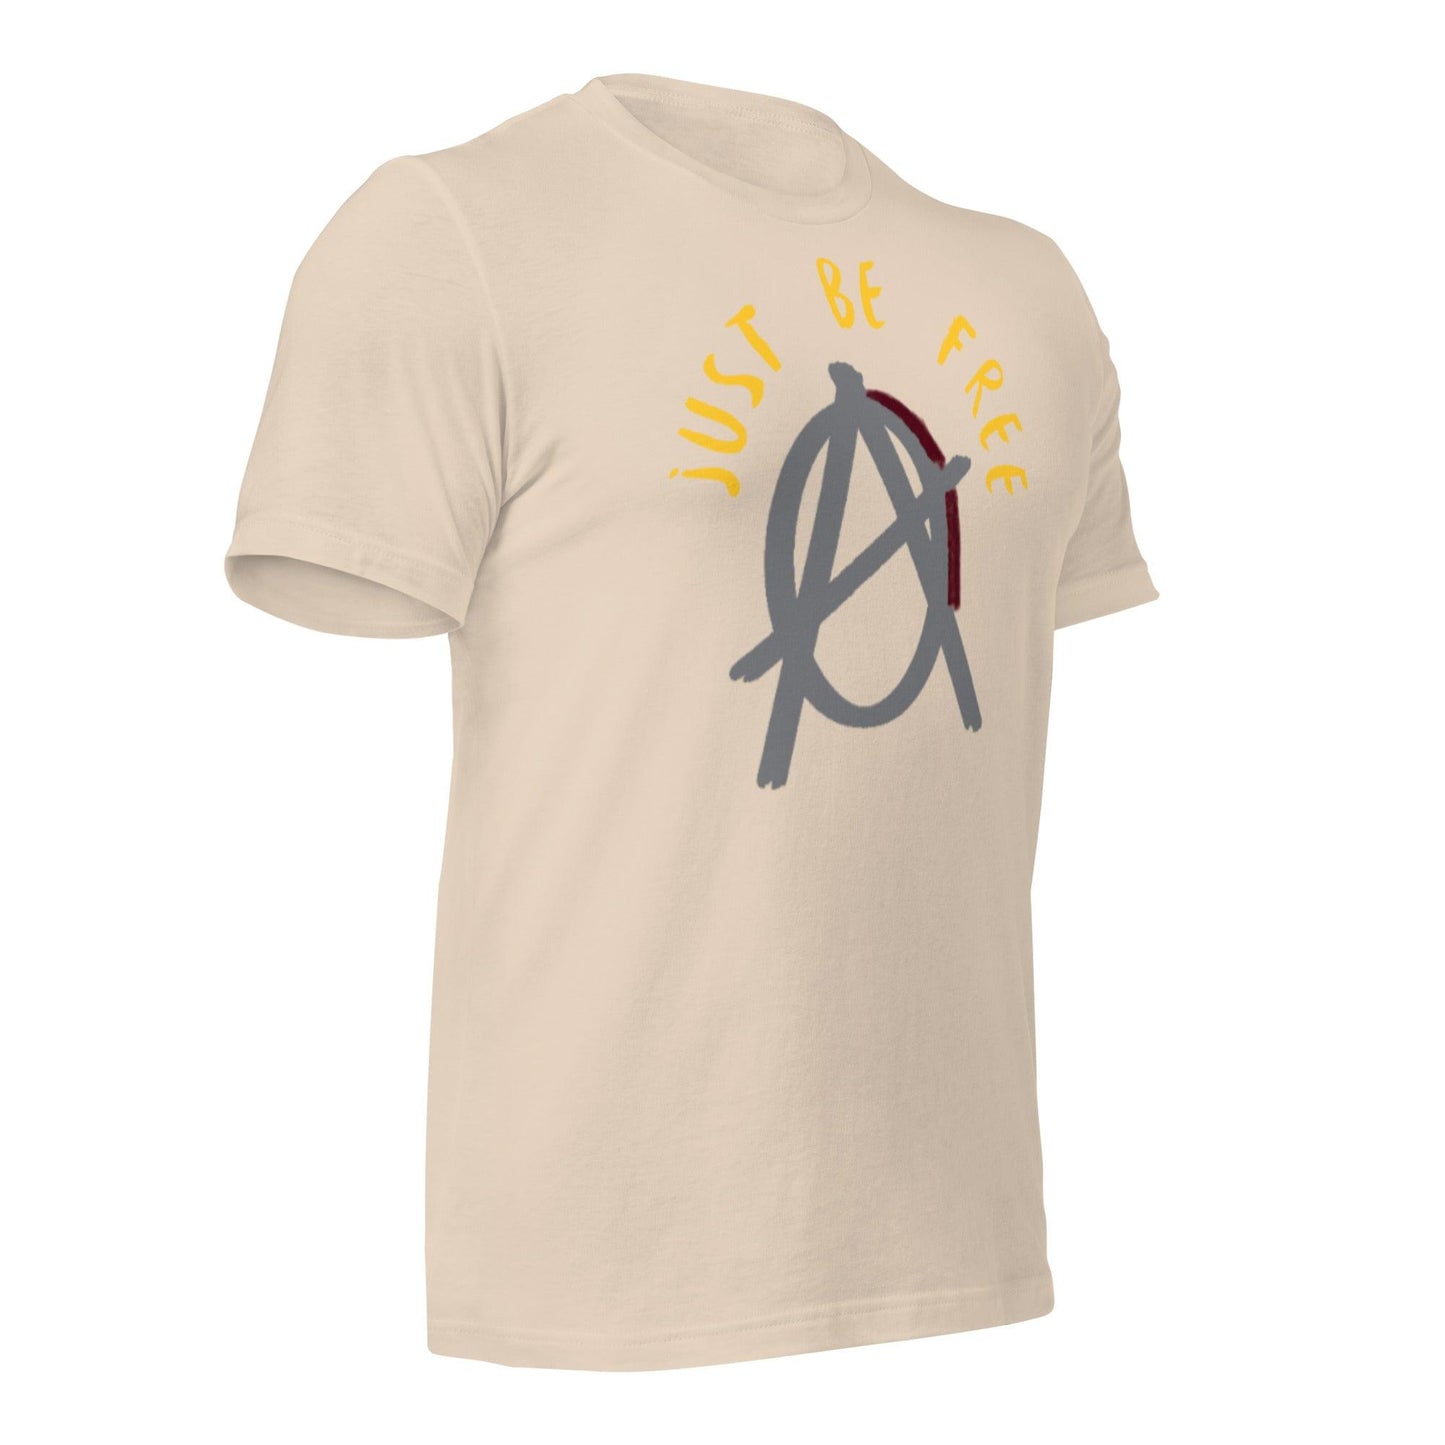 Anarchy Wear "Just Be Free" Grey Pastels Unisex t-shirt - AnarchyWear